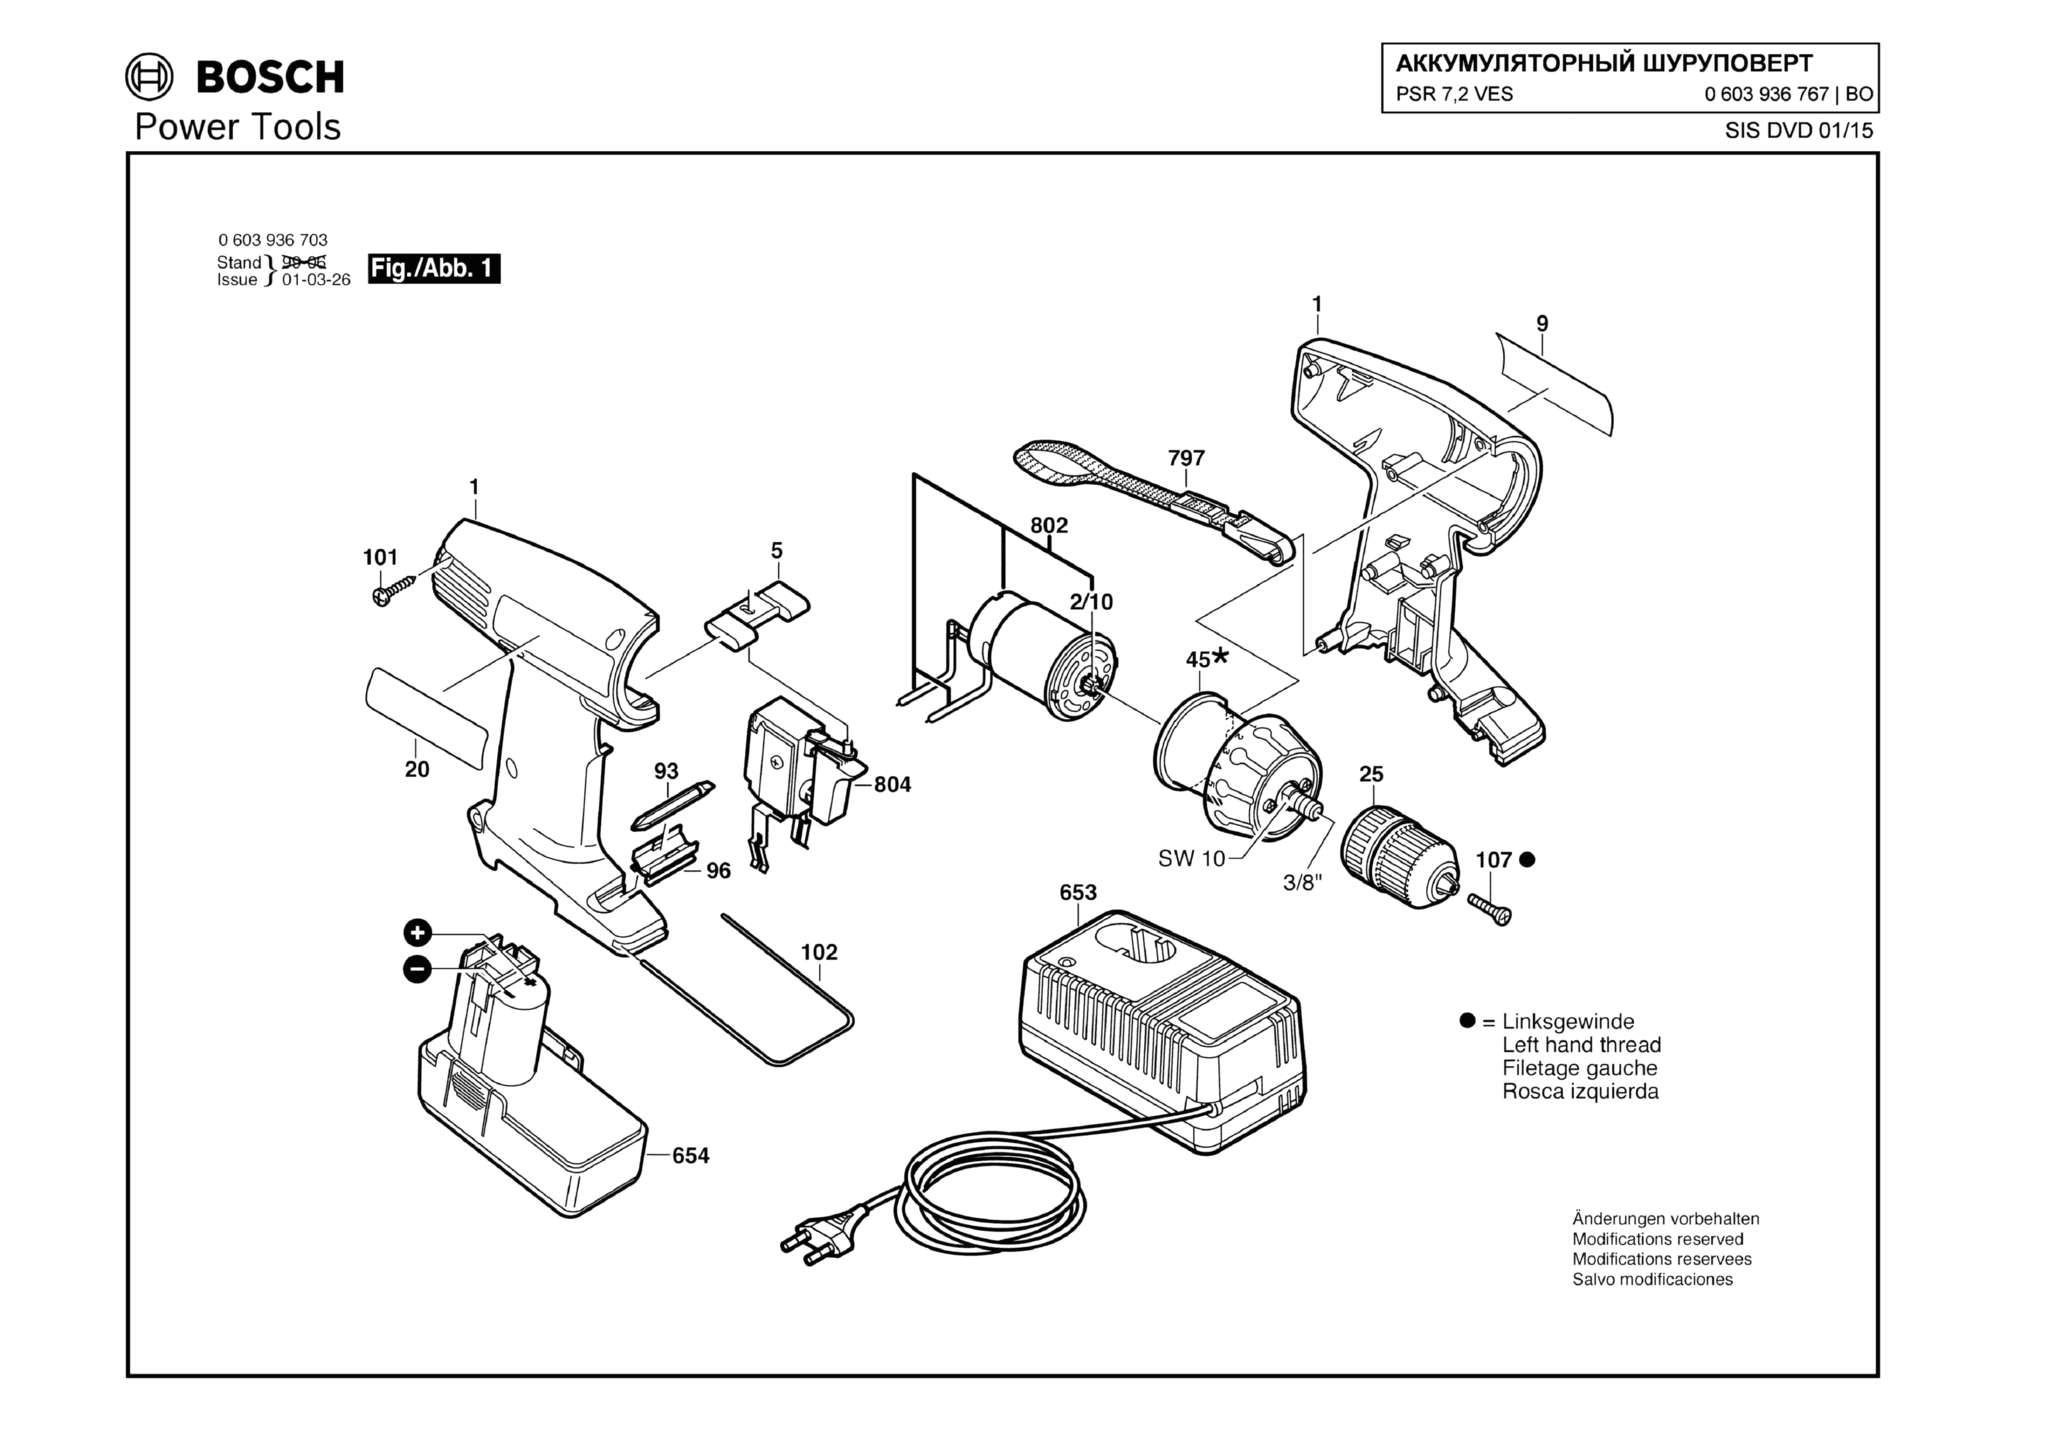 Запчасти, схема и деталировка Bosch PSR 7,2 VES (ТИП 0603936767)